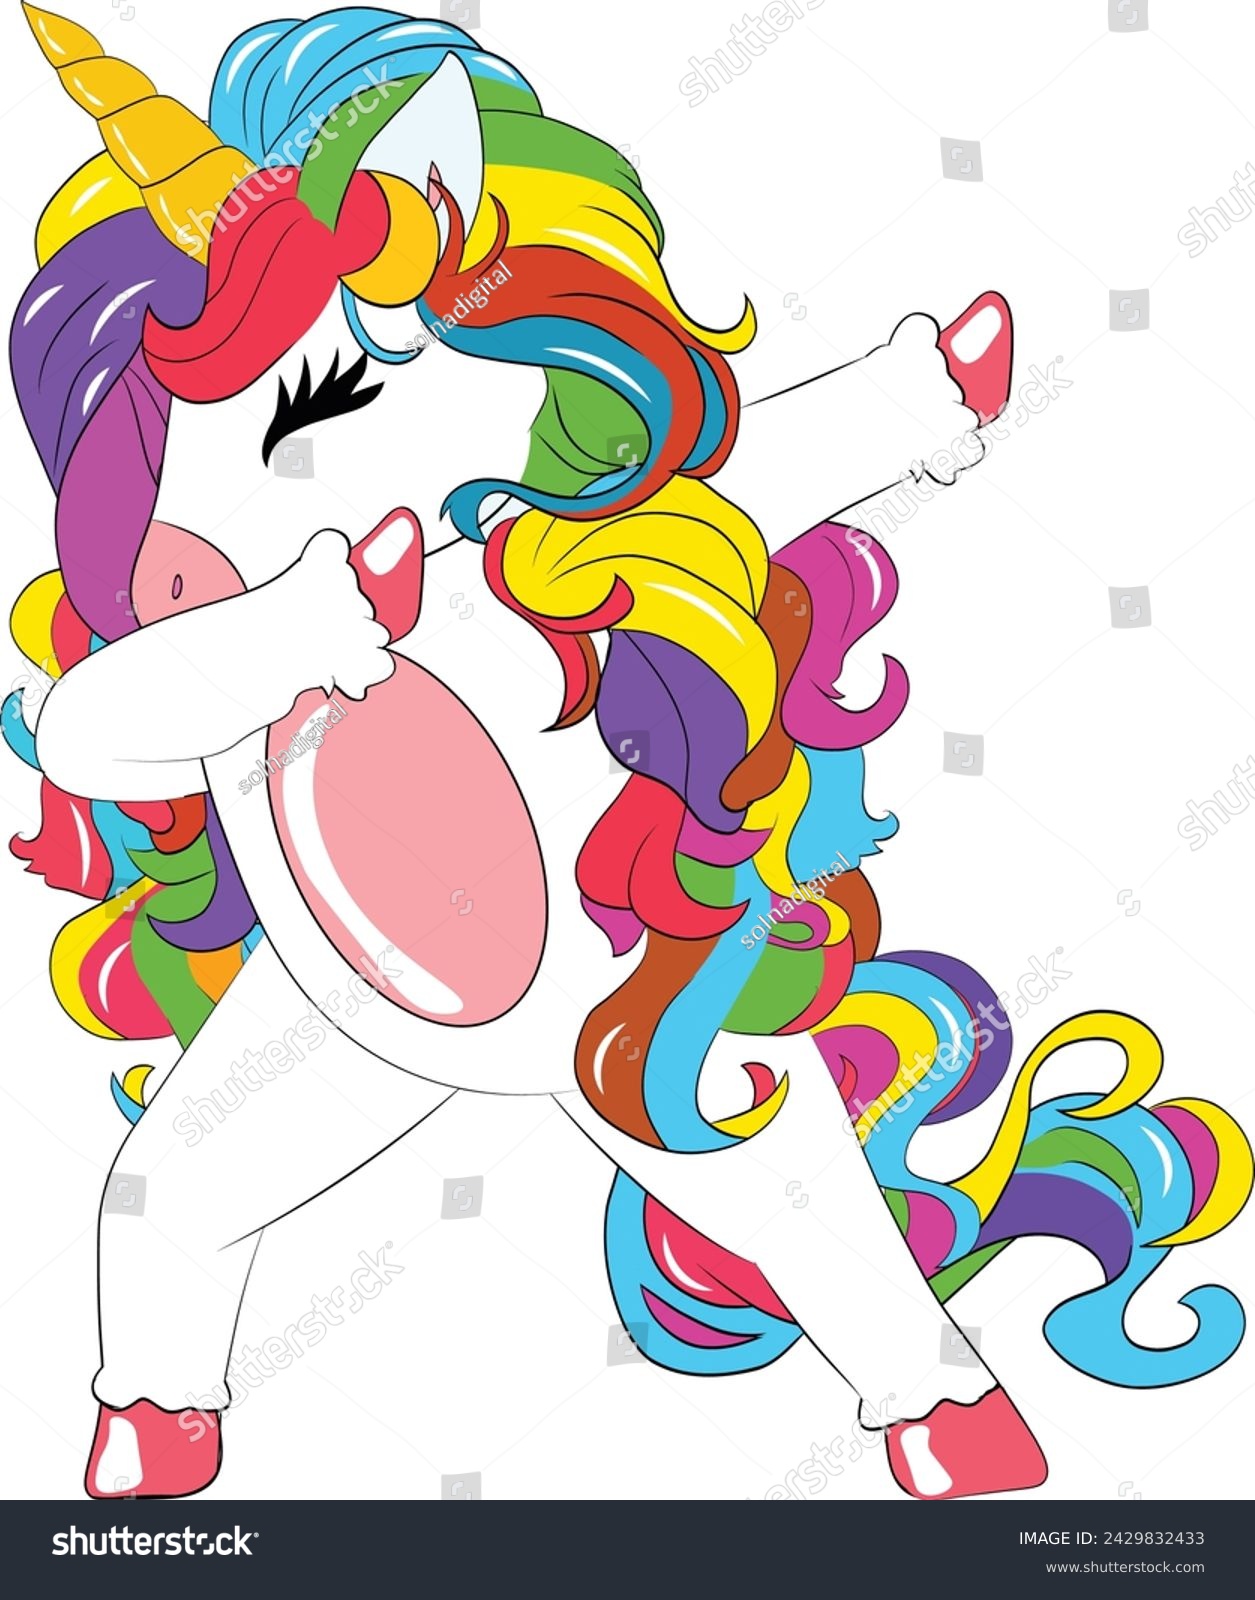 SVG of Cute Dabbing Unicorn. Awesome Dab Unicorn rainbow colors doing the dab dance. svg